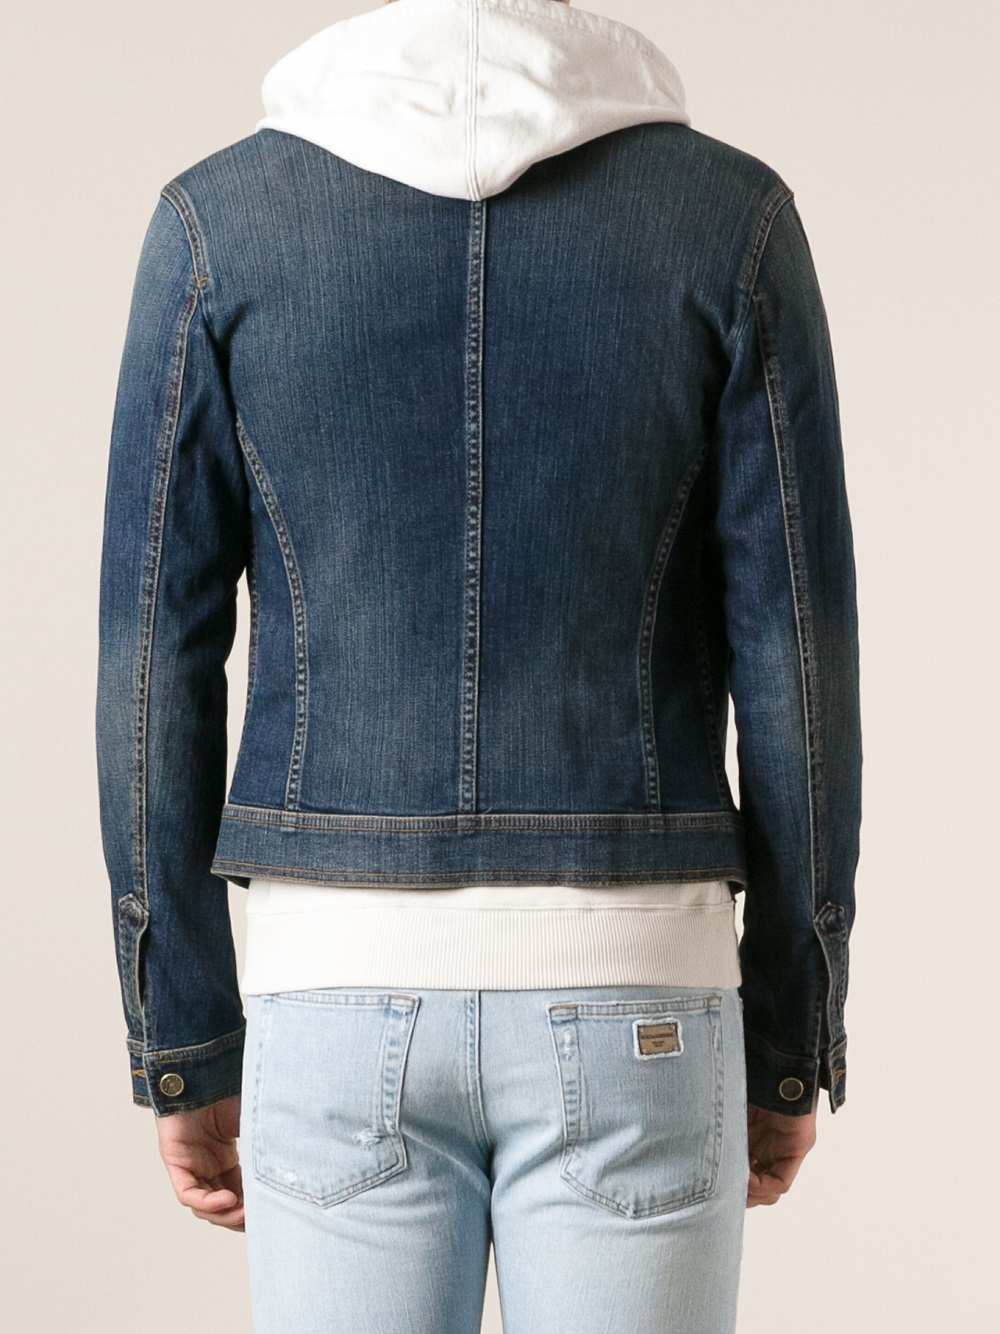 Dolce & Gabbana Cropped Denim Jacket in Blue for Men - Lyst